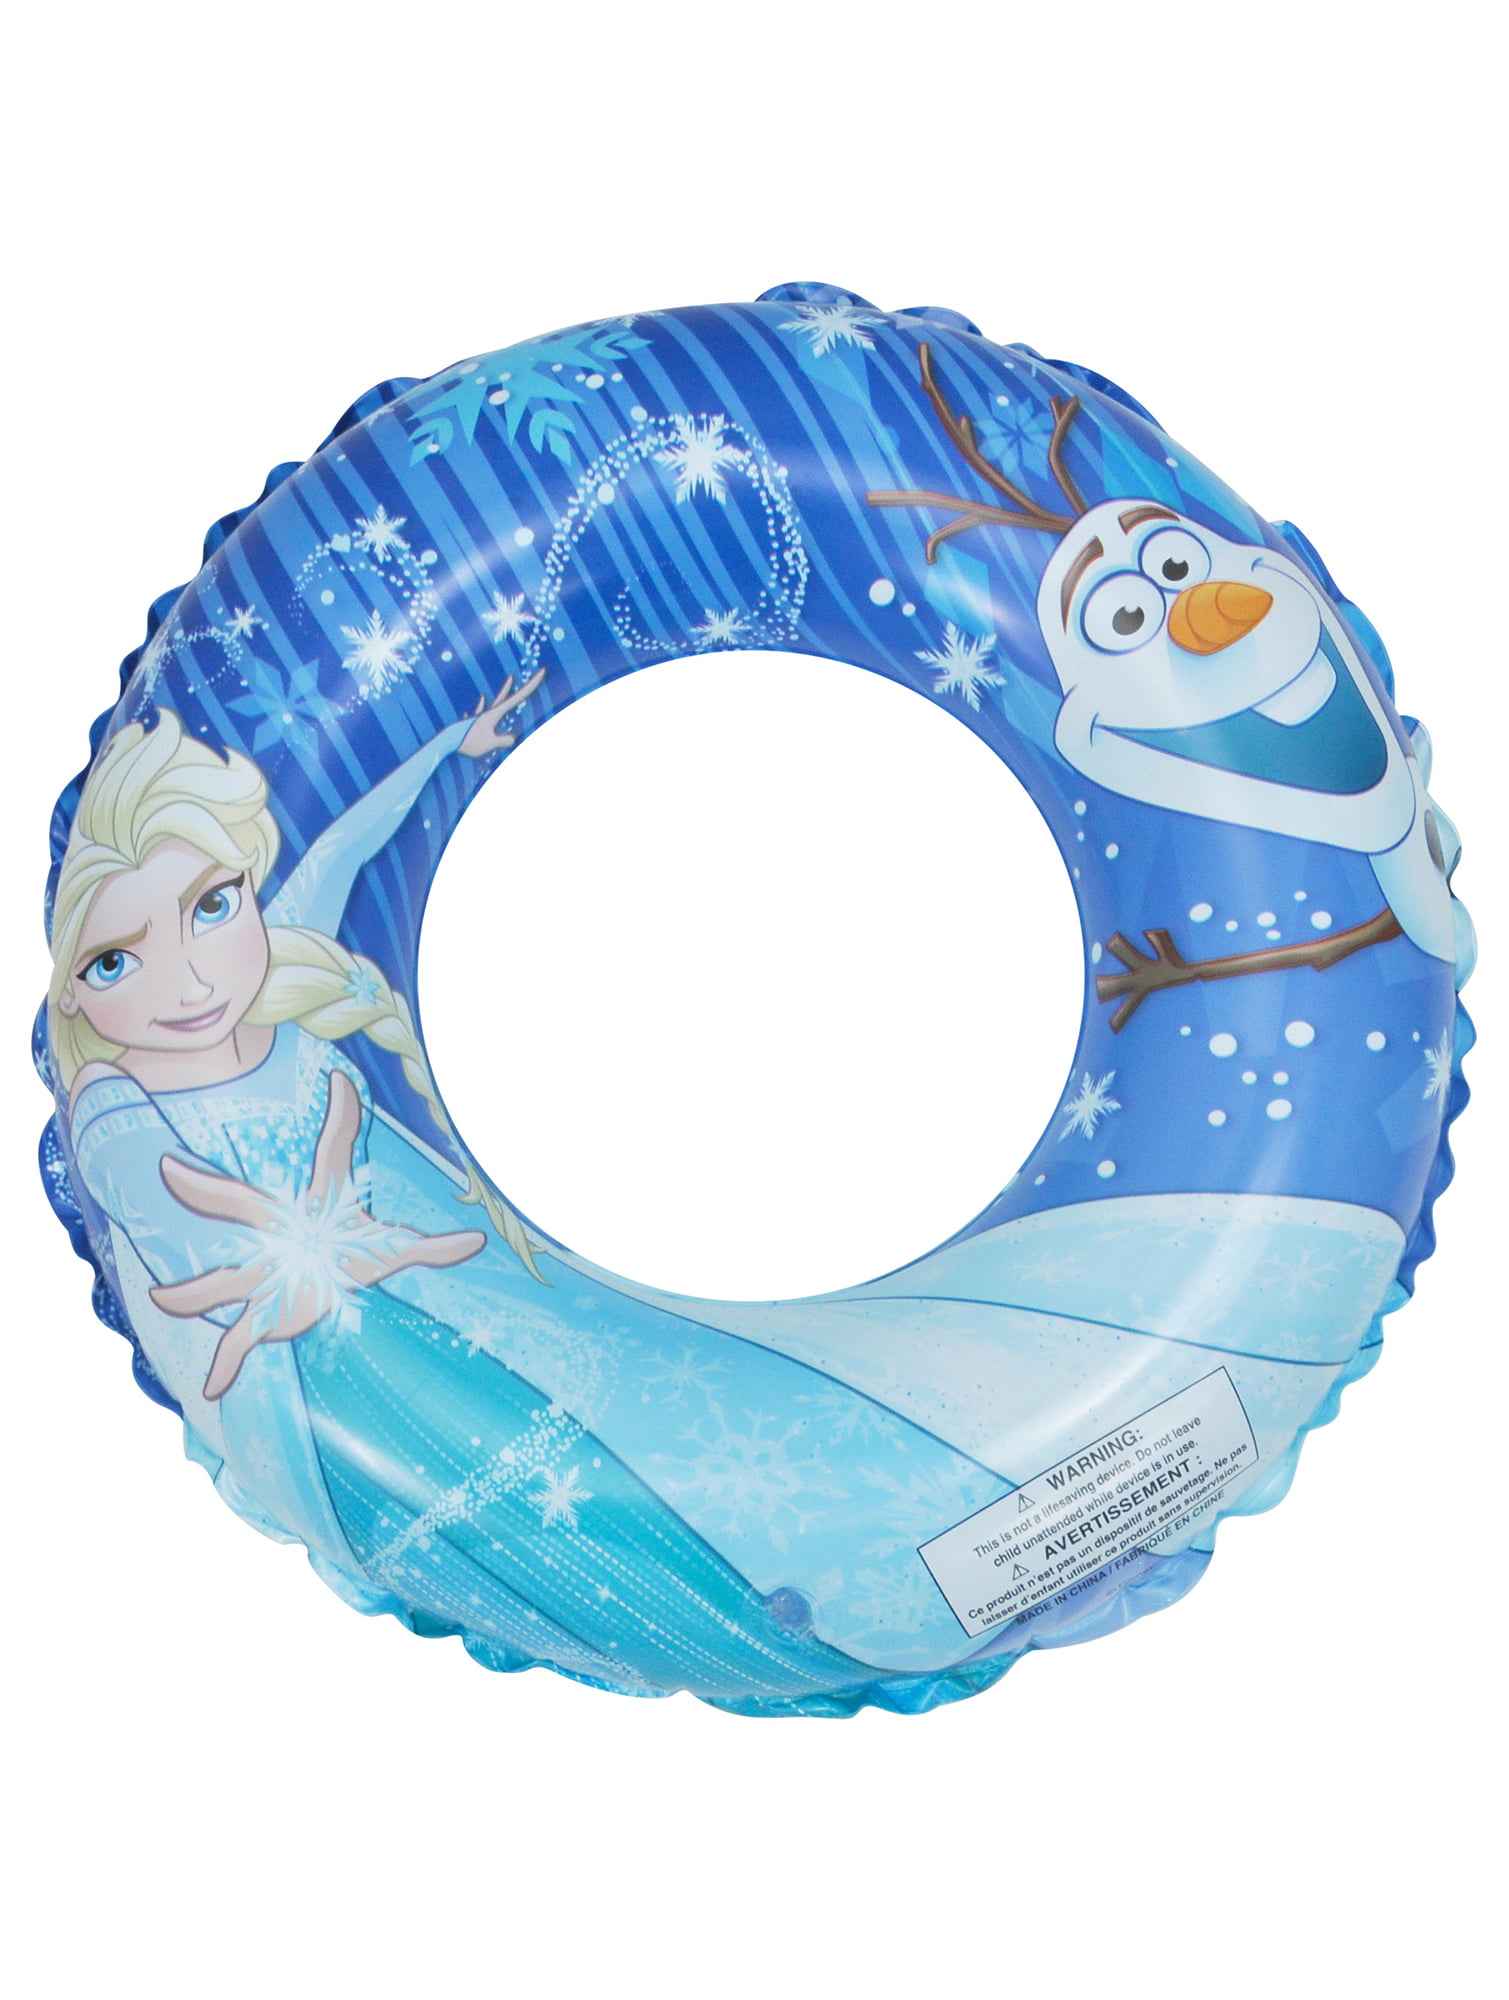 Disney Elsa Anna Inflatable Kids Arm Bands 15cm x 25cm NEW 